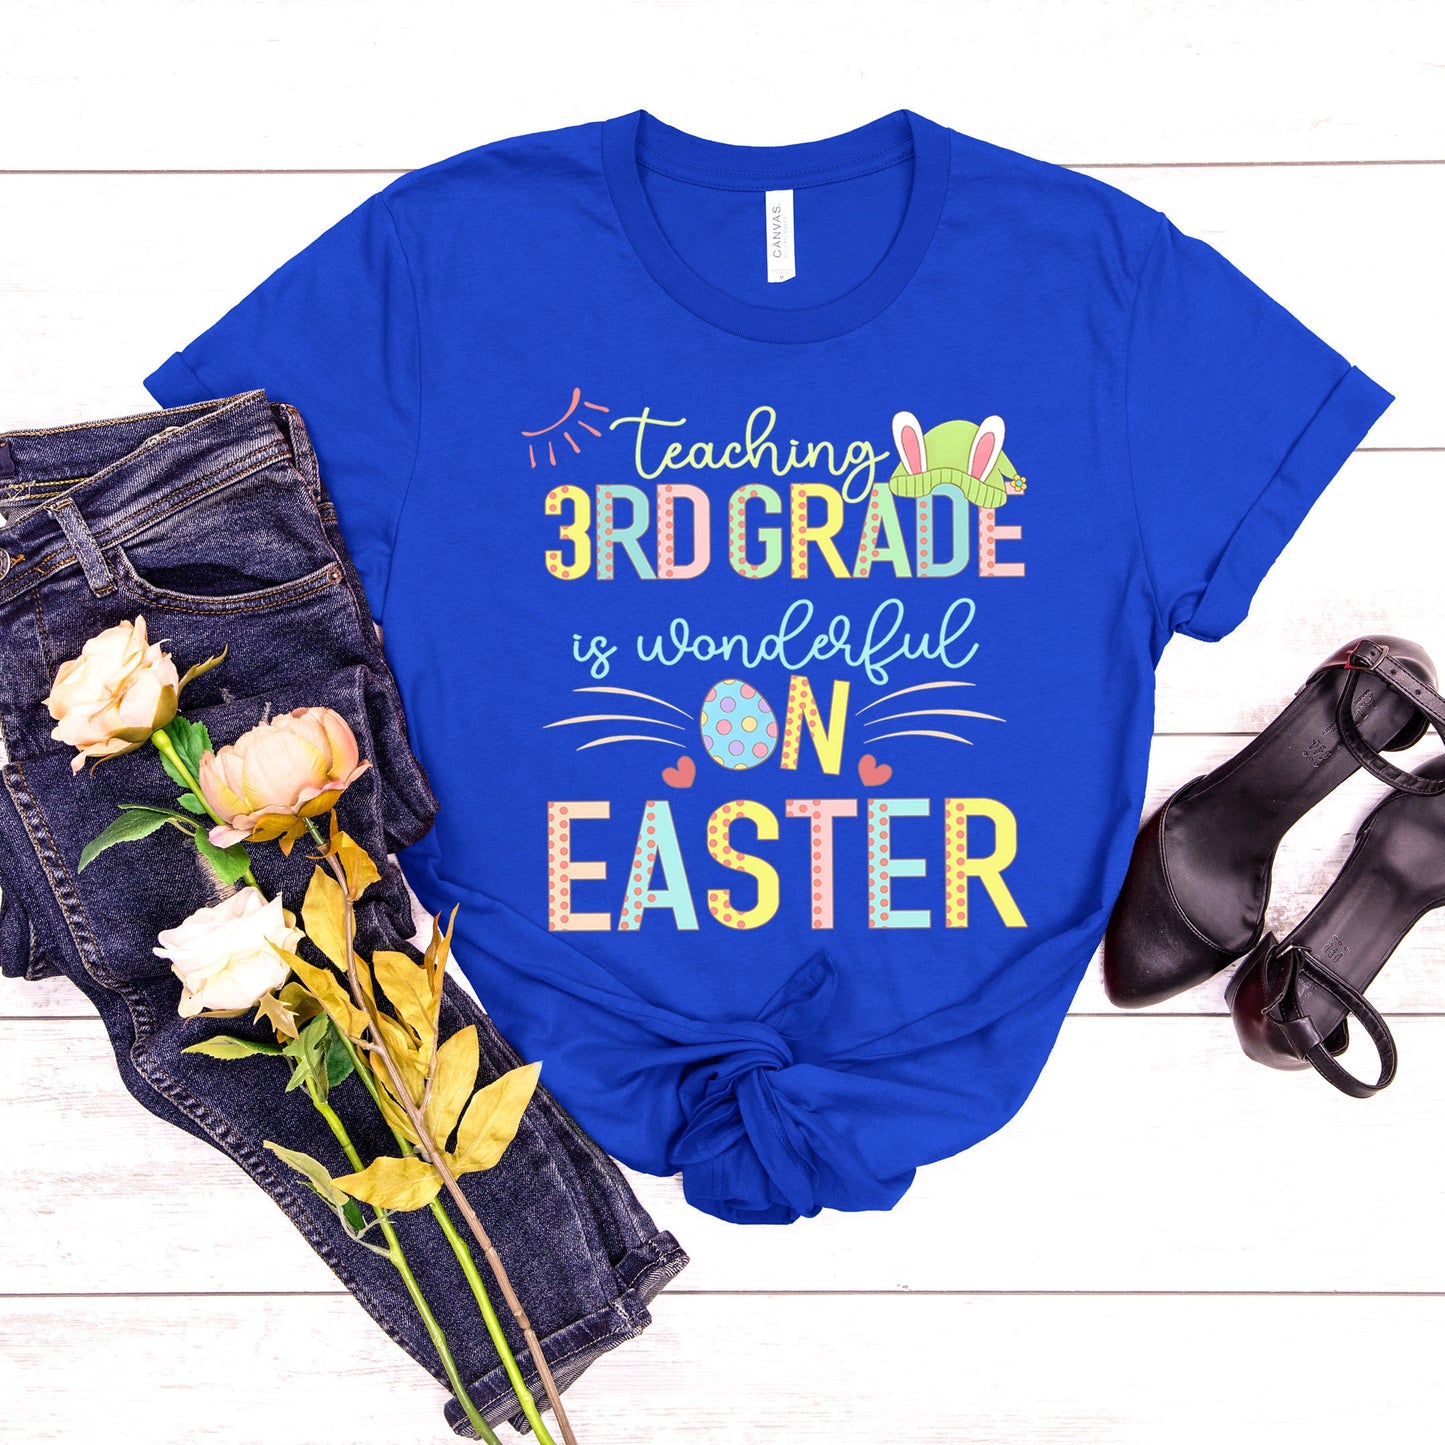 Teaching 3rd Grade Is Wonderful On Easter Shirt, Third Grade Elementary School Hip Hop Easter Tee Happy Easter Teacher Team Hoppy Bunny